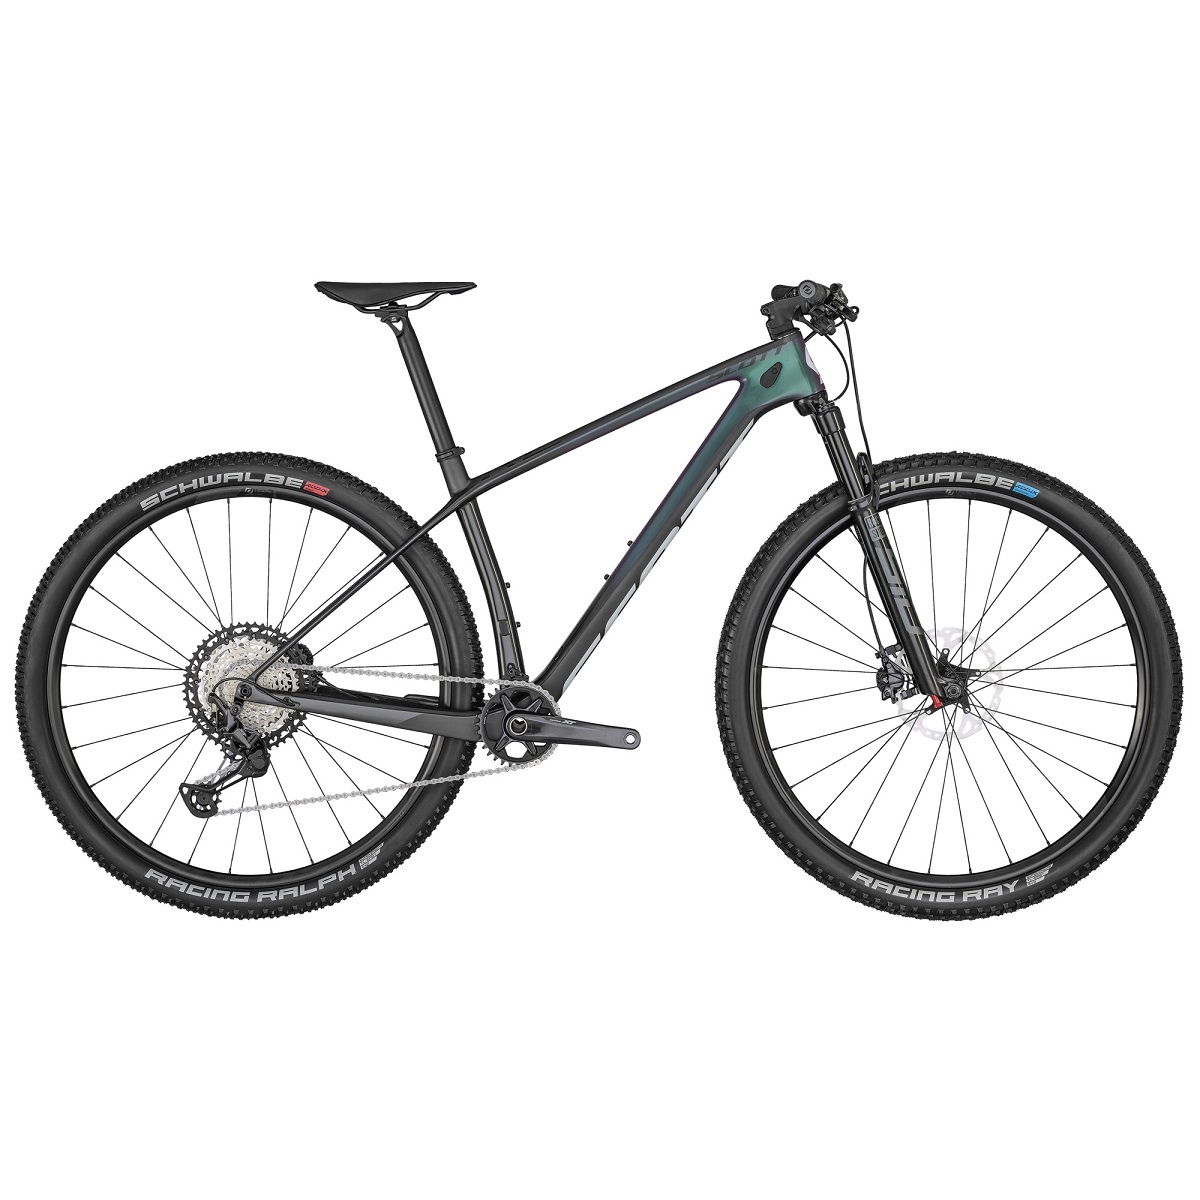 2022-scott-scale-rc-team-mountain-bike